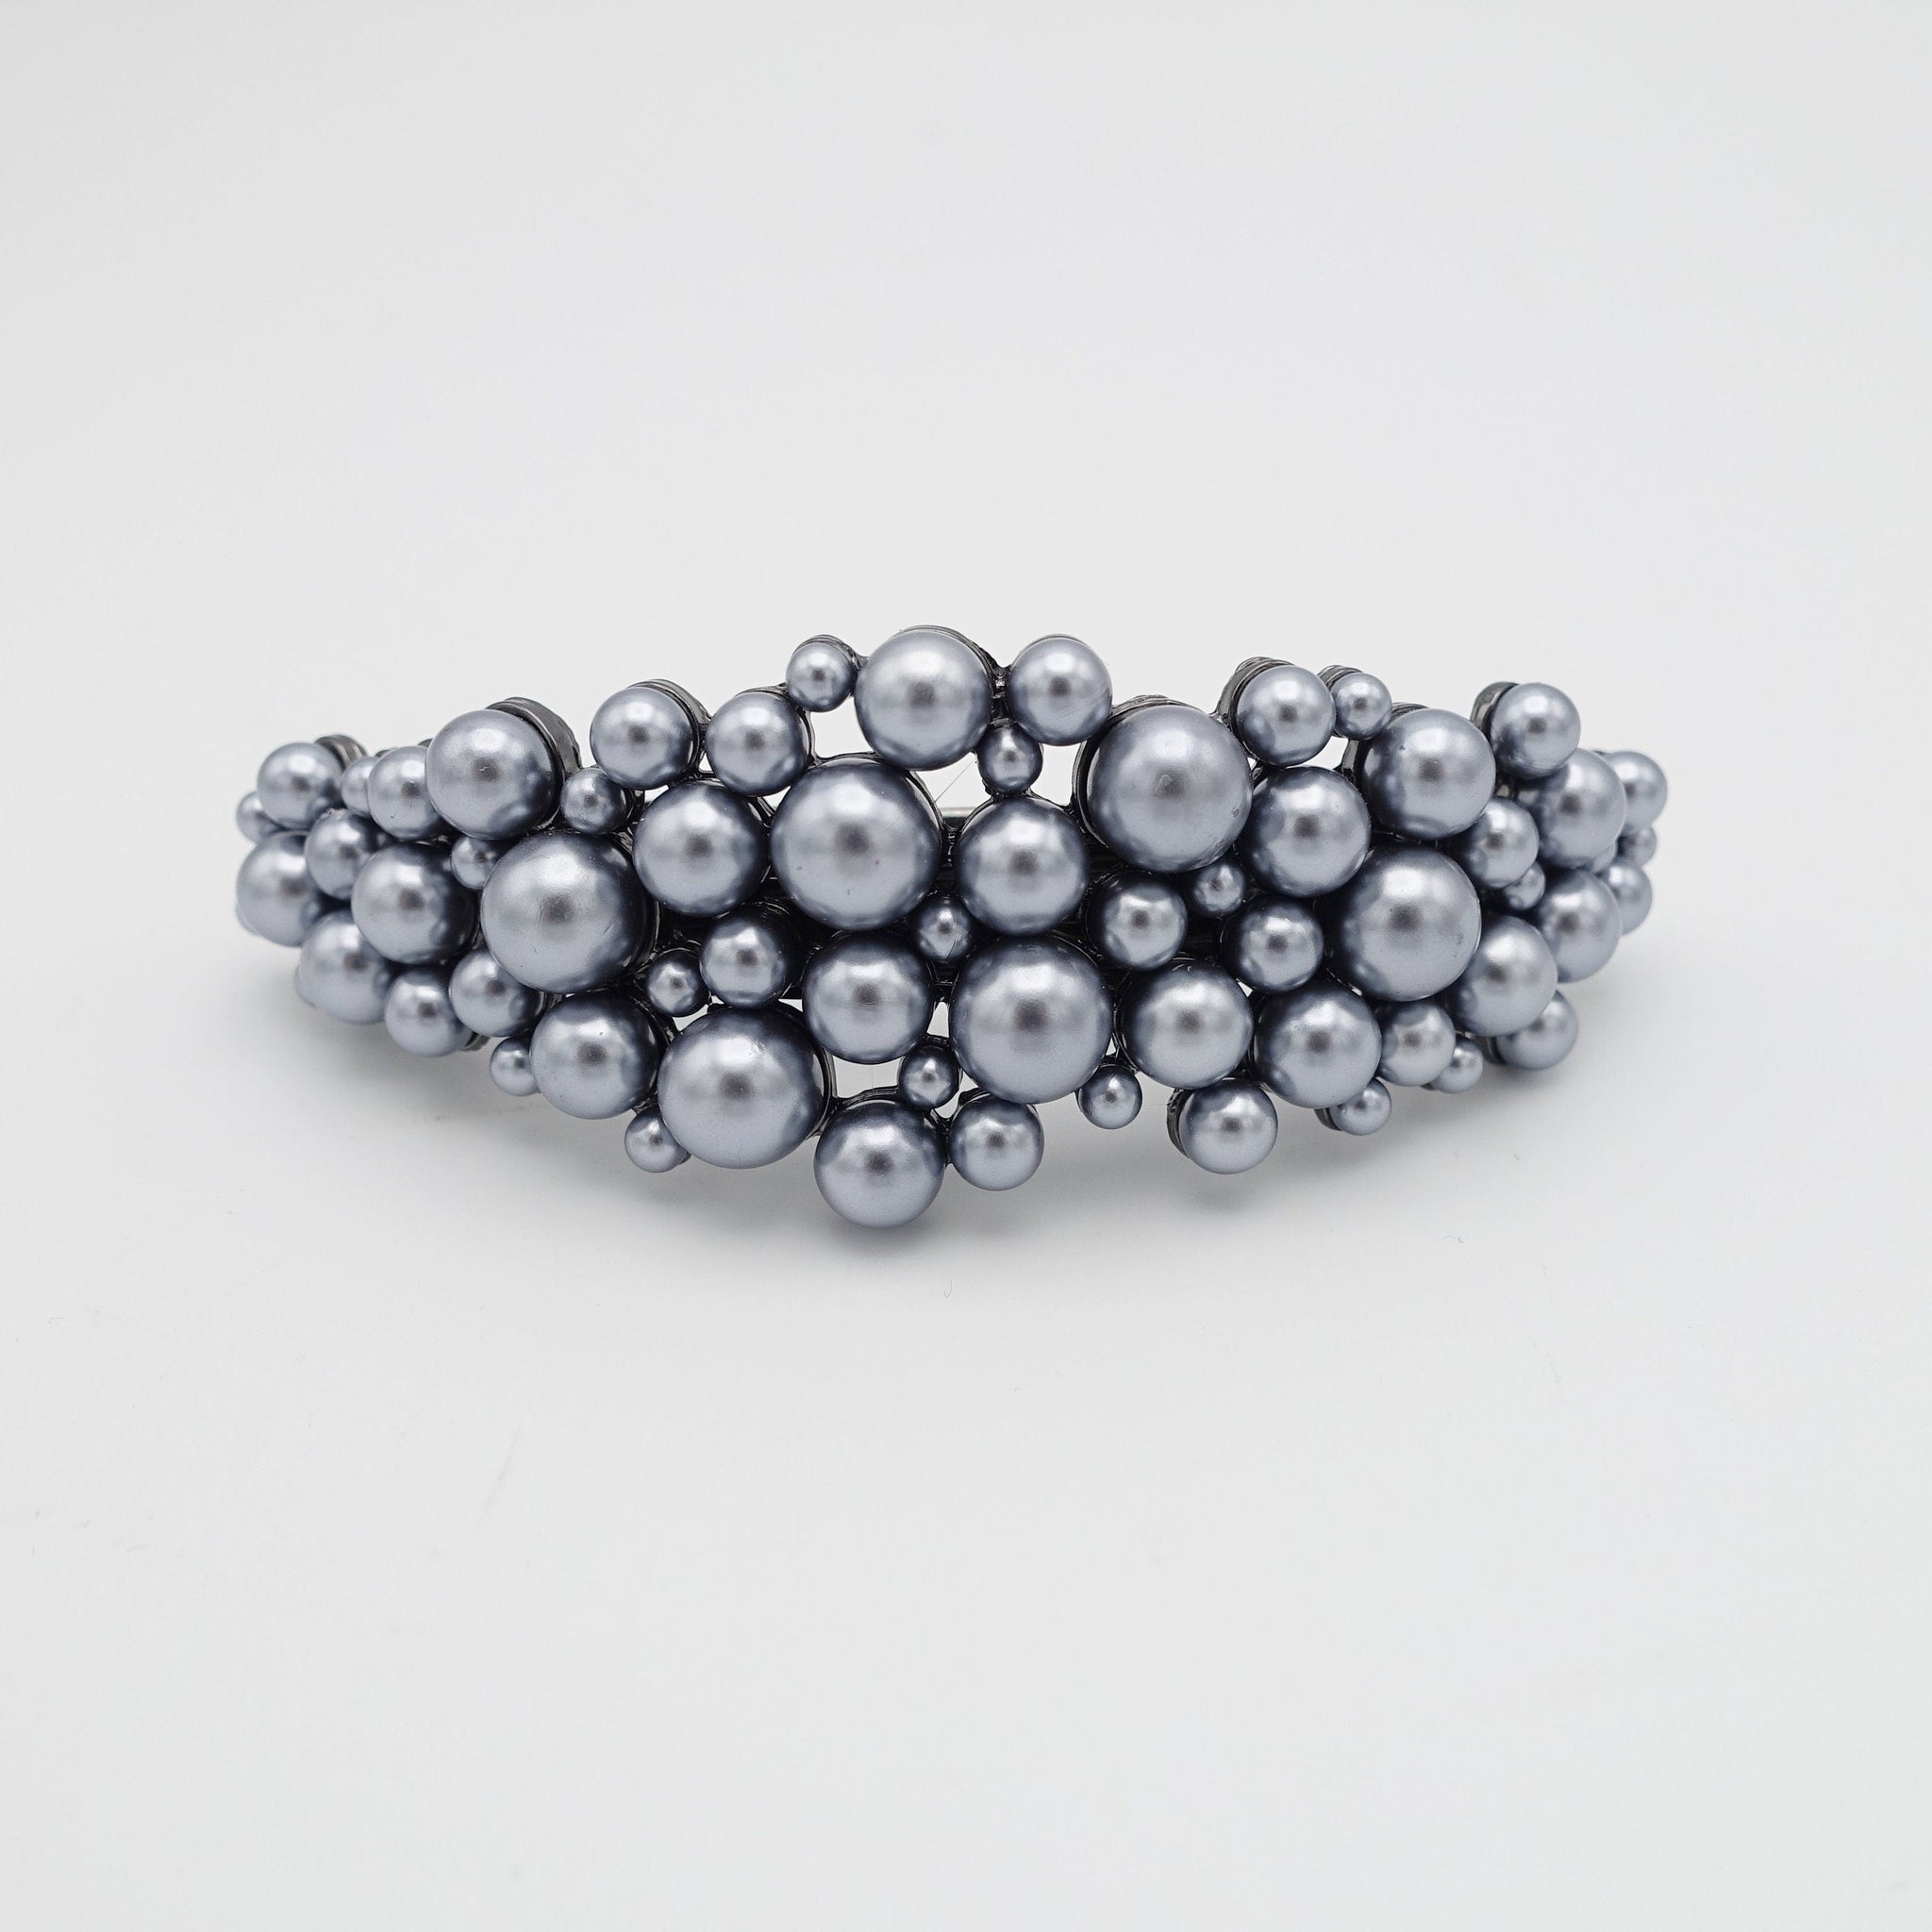 veryshine.com Barrette (Bow) multi size pearl embellished curved french barrette elegant women hair accessory